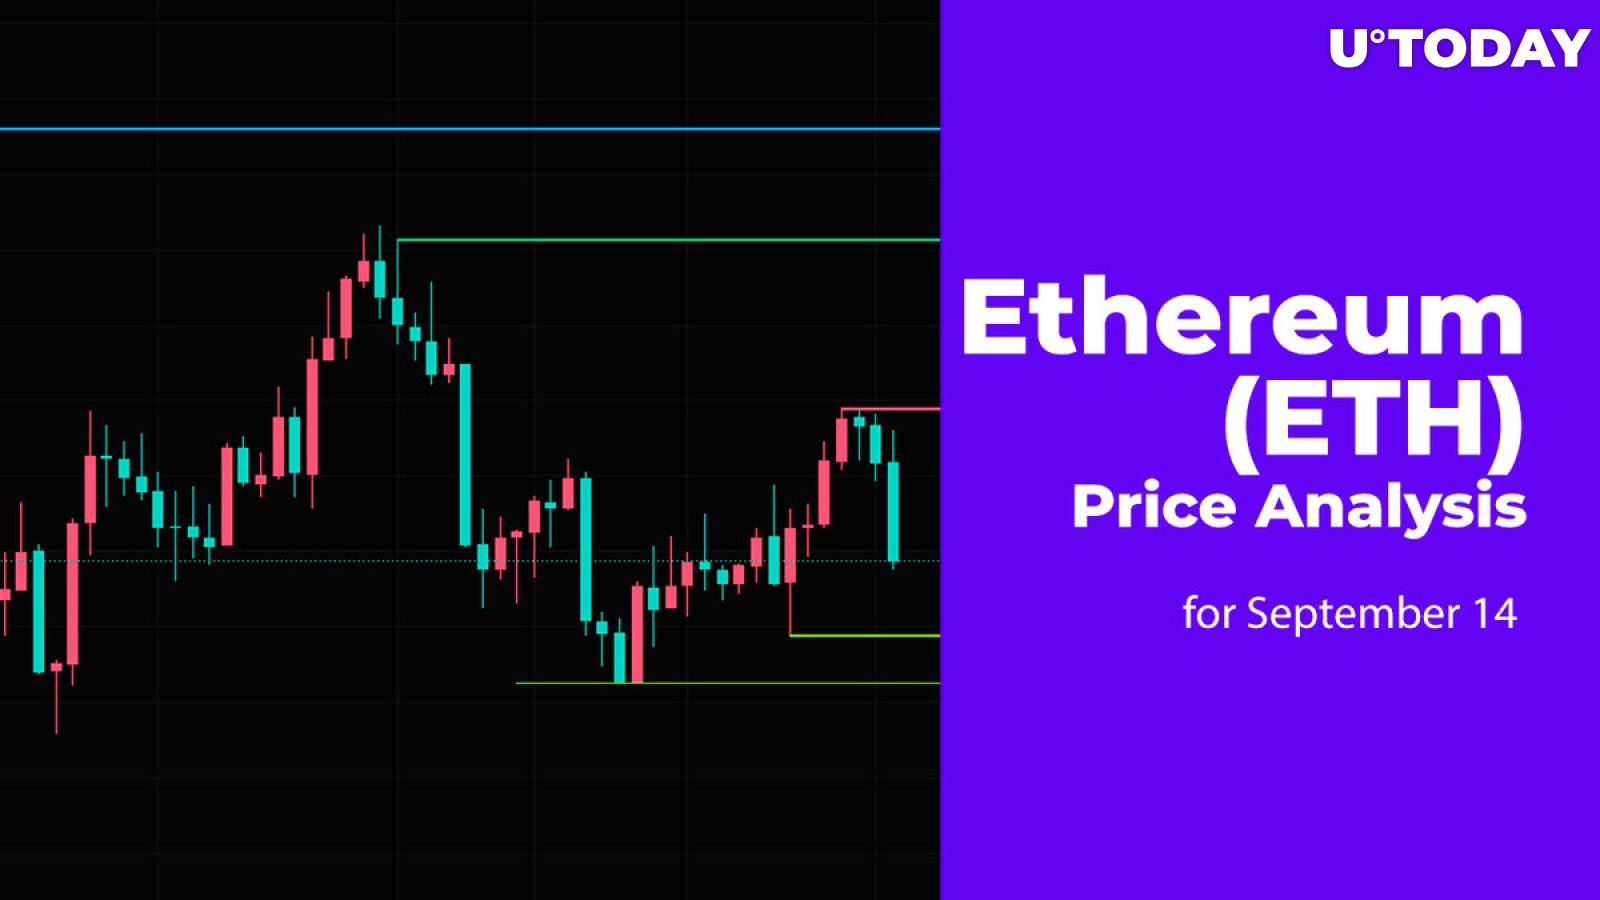 Ethereum (ETH) Price Analysis for September 14